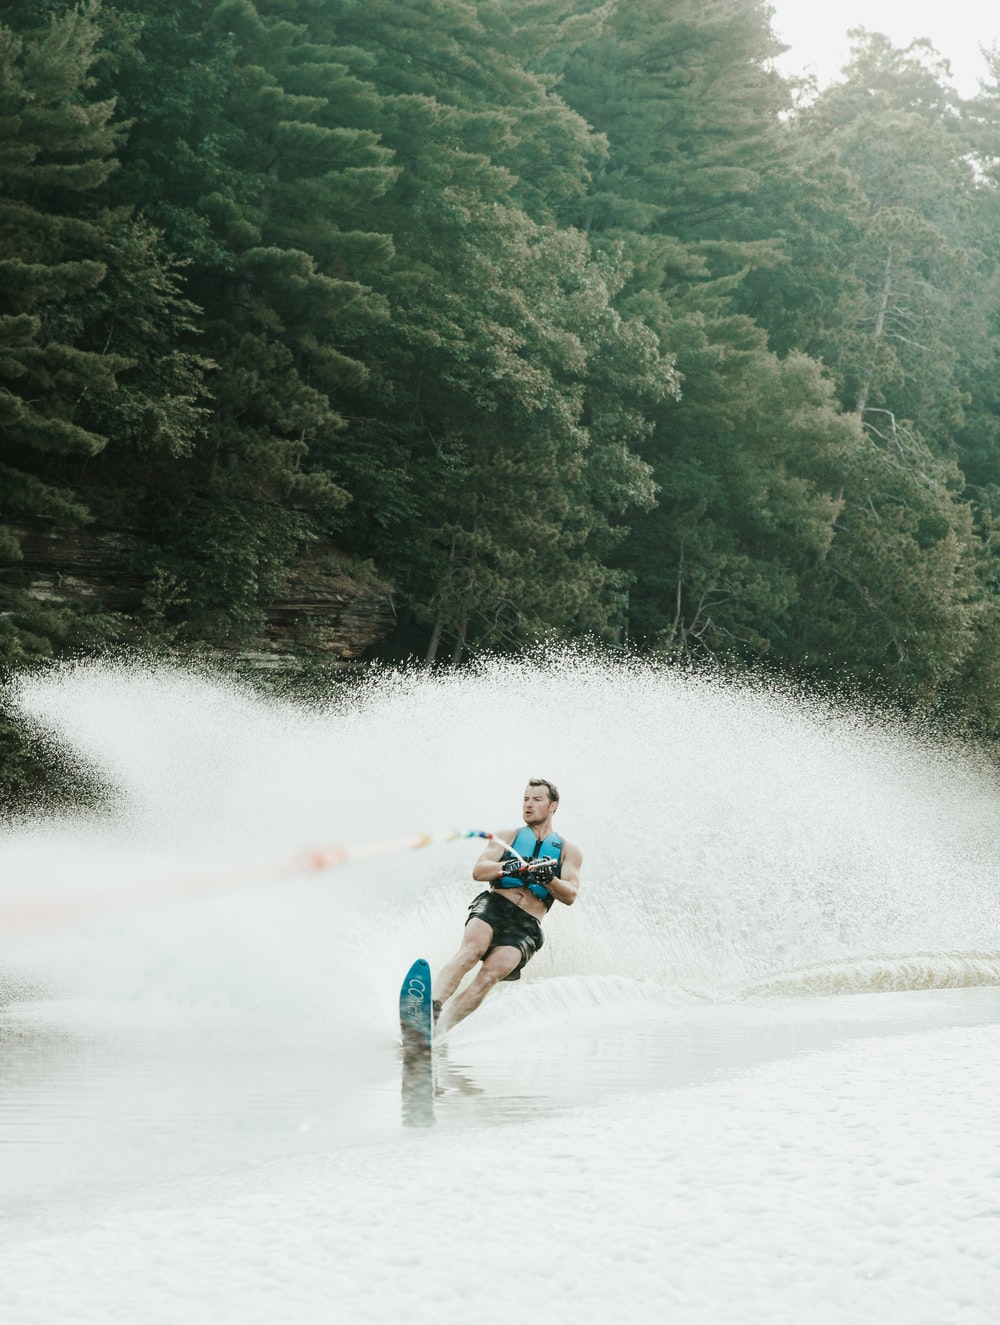 Water Ski Picture. Download Free Image